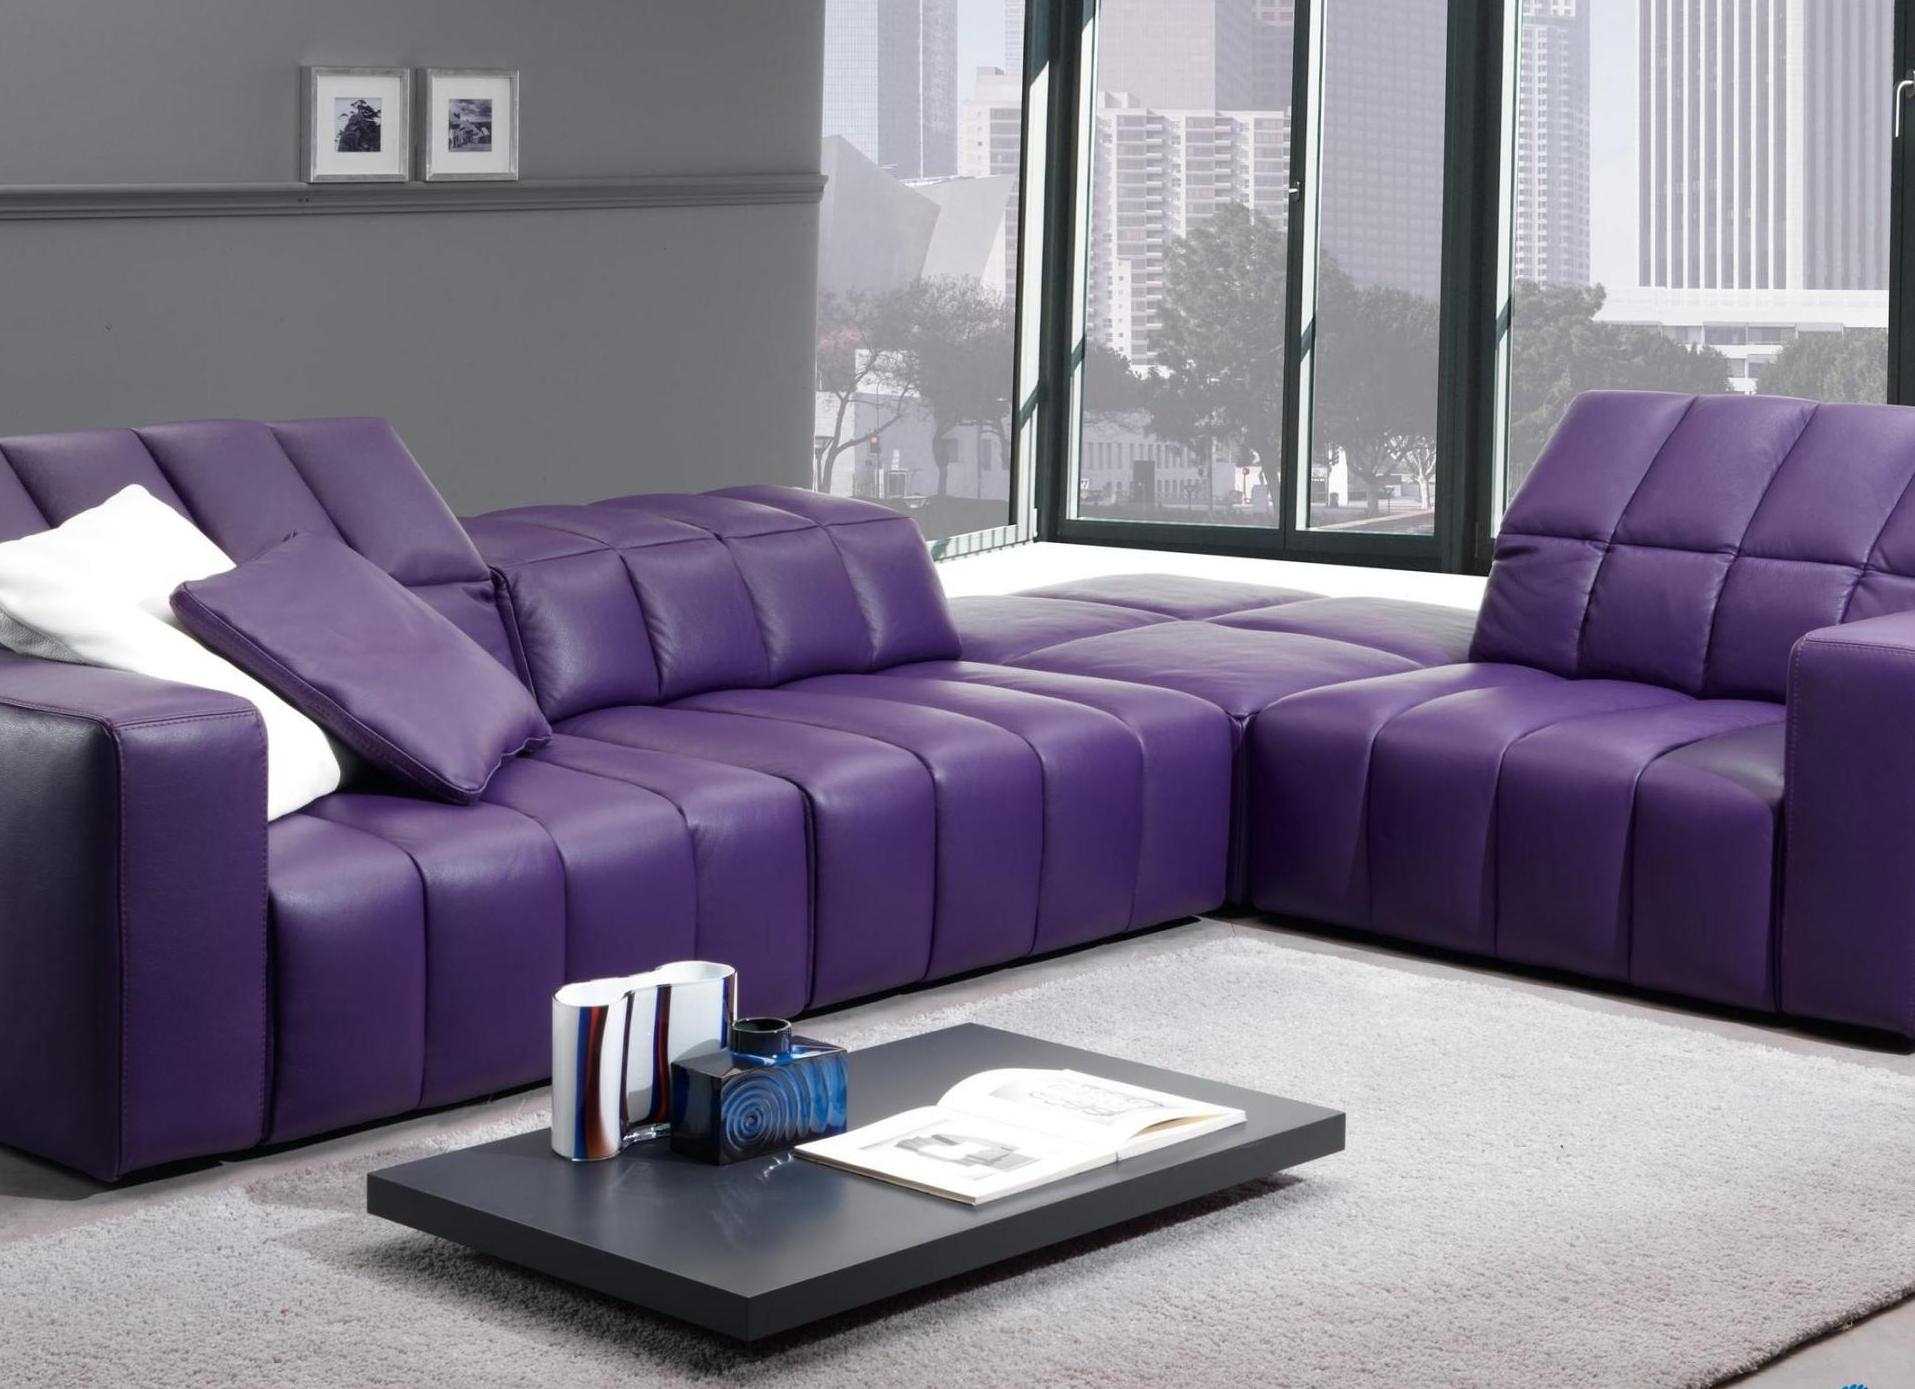 light purple sofa in the design of the bedroom